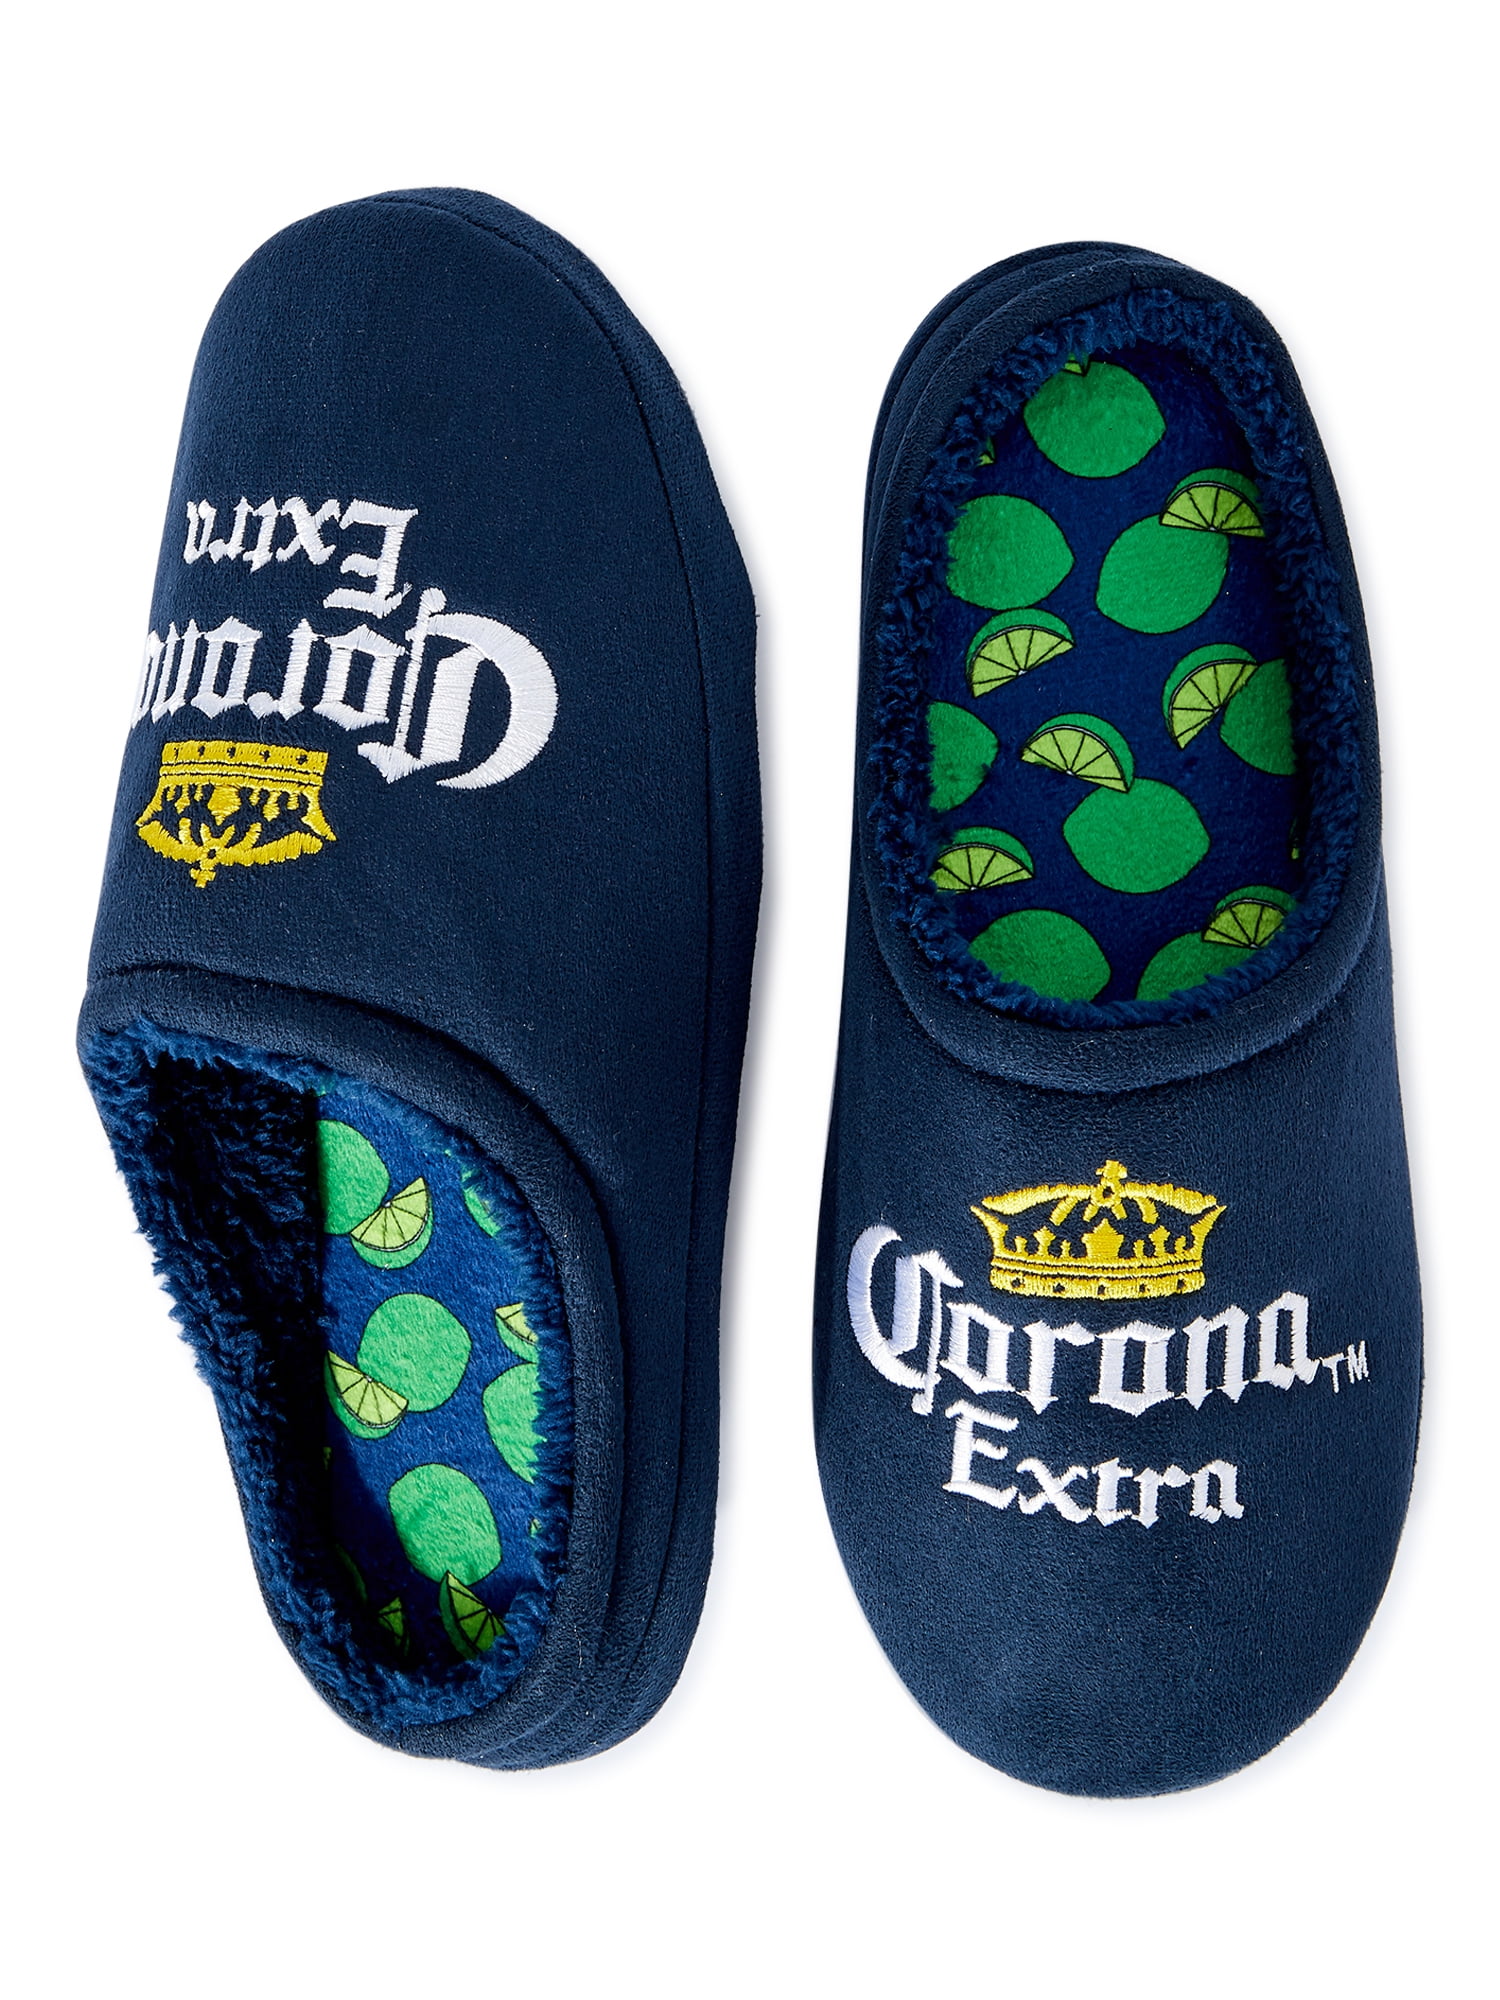 diabetic slippers walmart